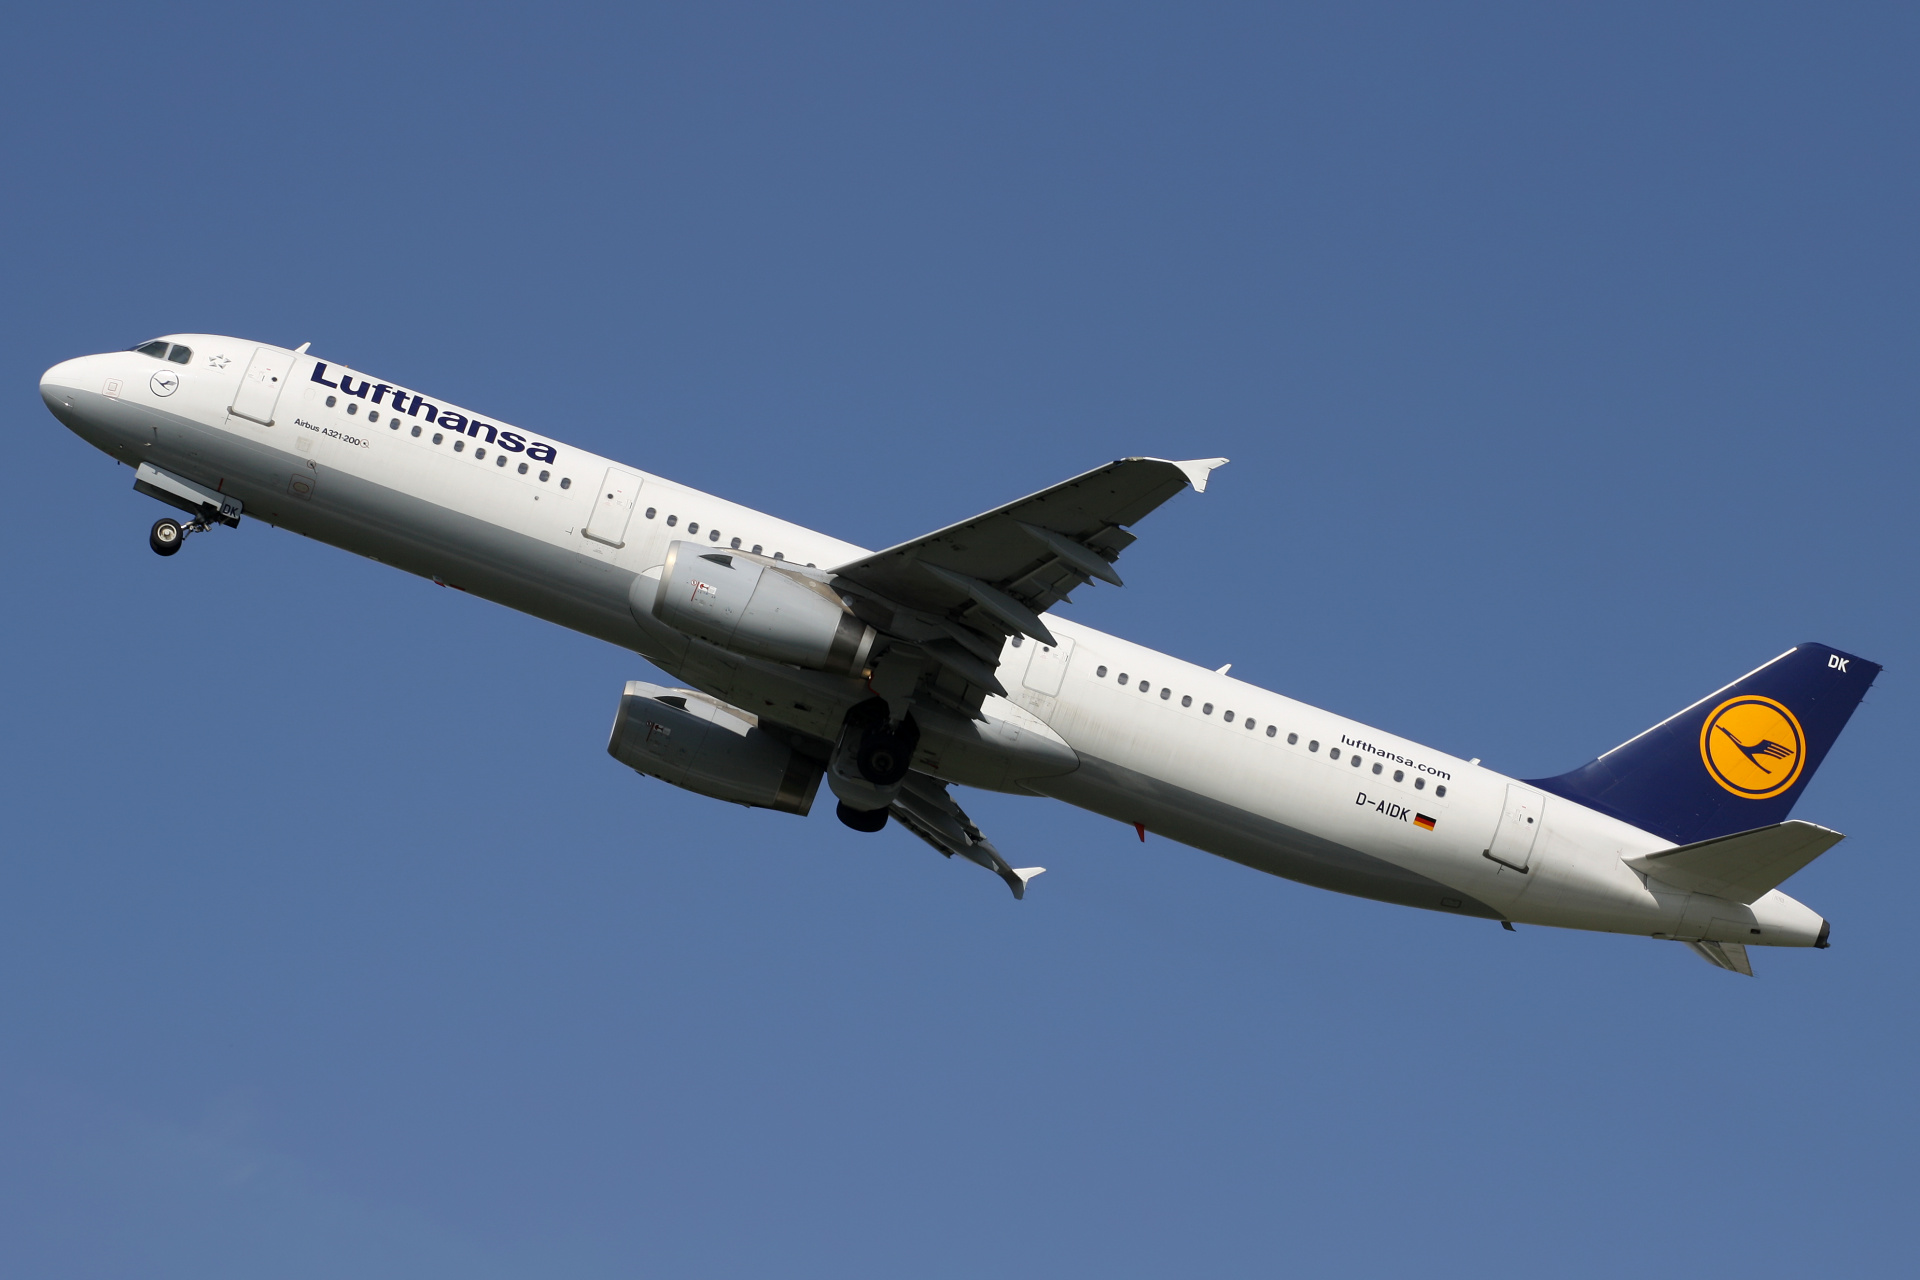 D-AIDK (Aircraft » EPWA Spotting » Airbus A321-200 » Lufthansa)